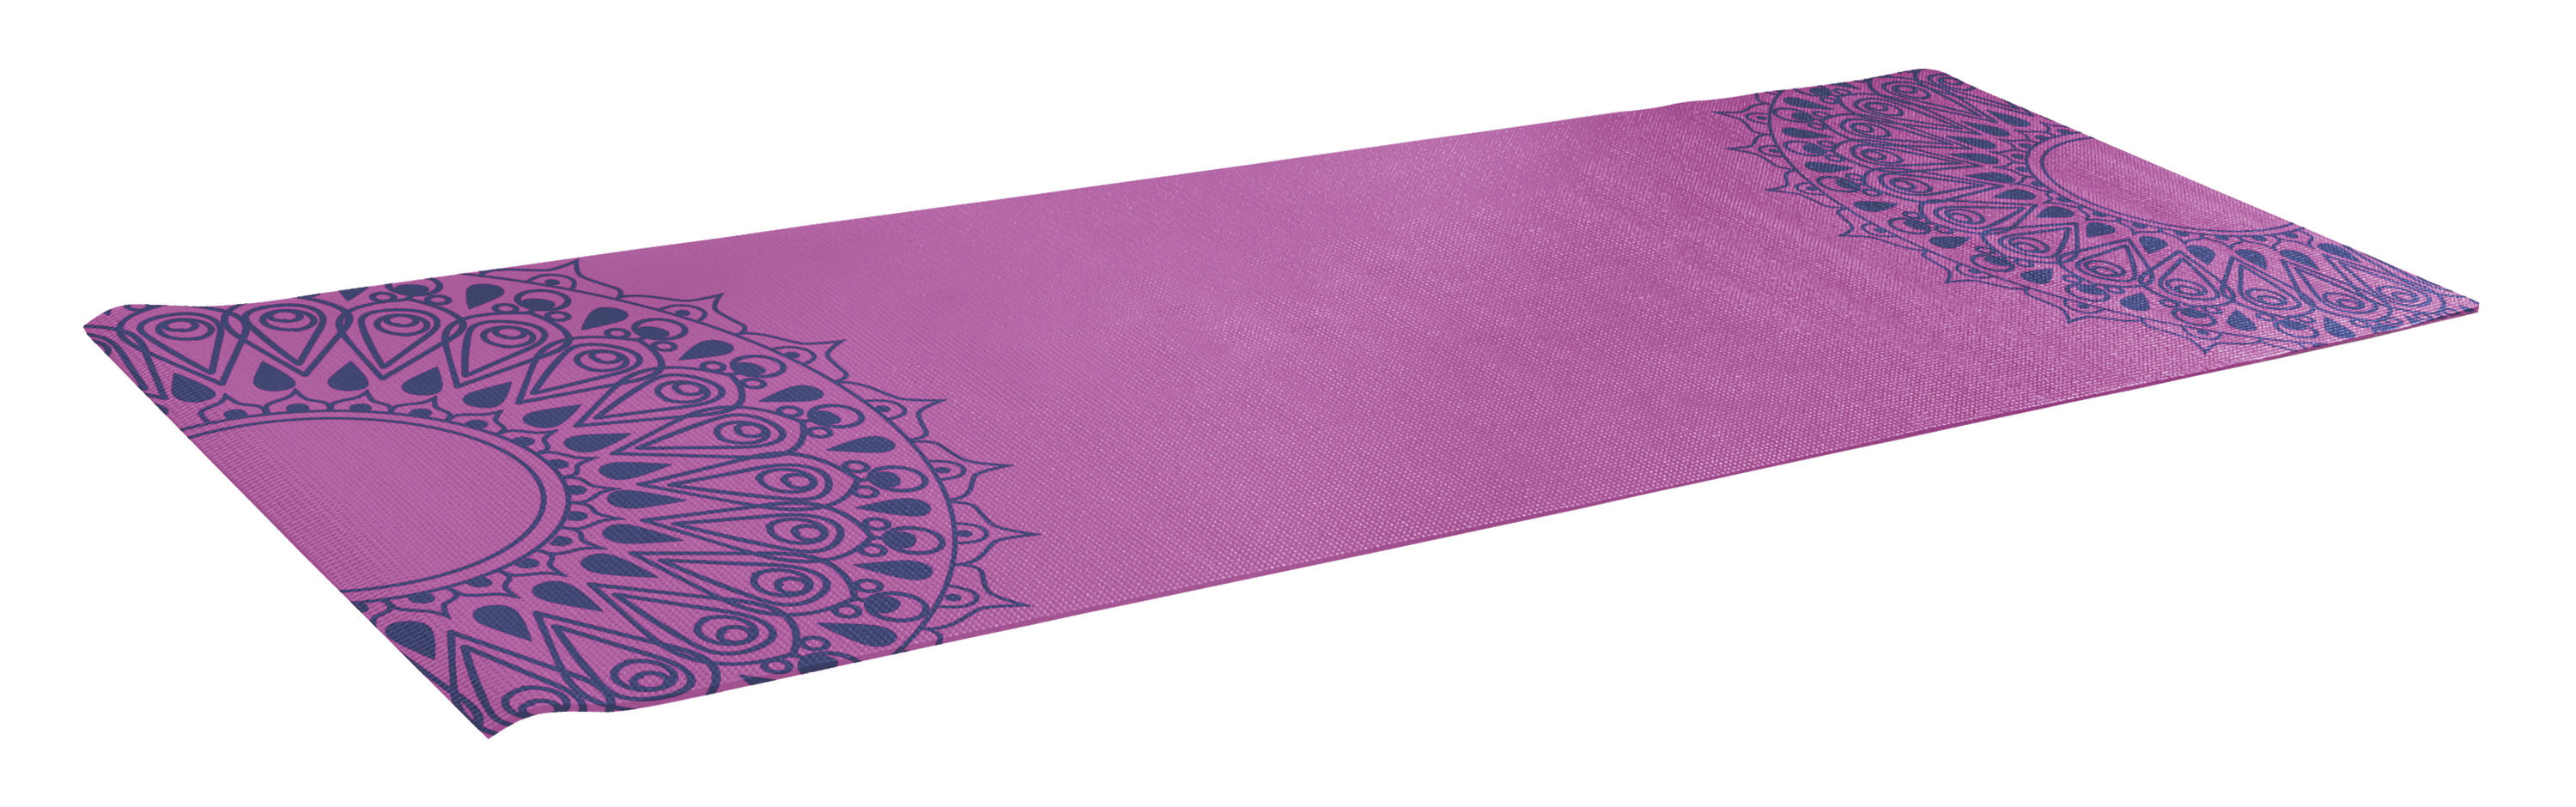 blad Doe mijn best uniek Lotus 3mm PVC Yoga Mat with Non-Slip Surface, Blue Chain Print - Walmart.com